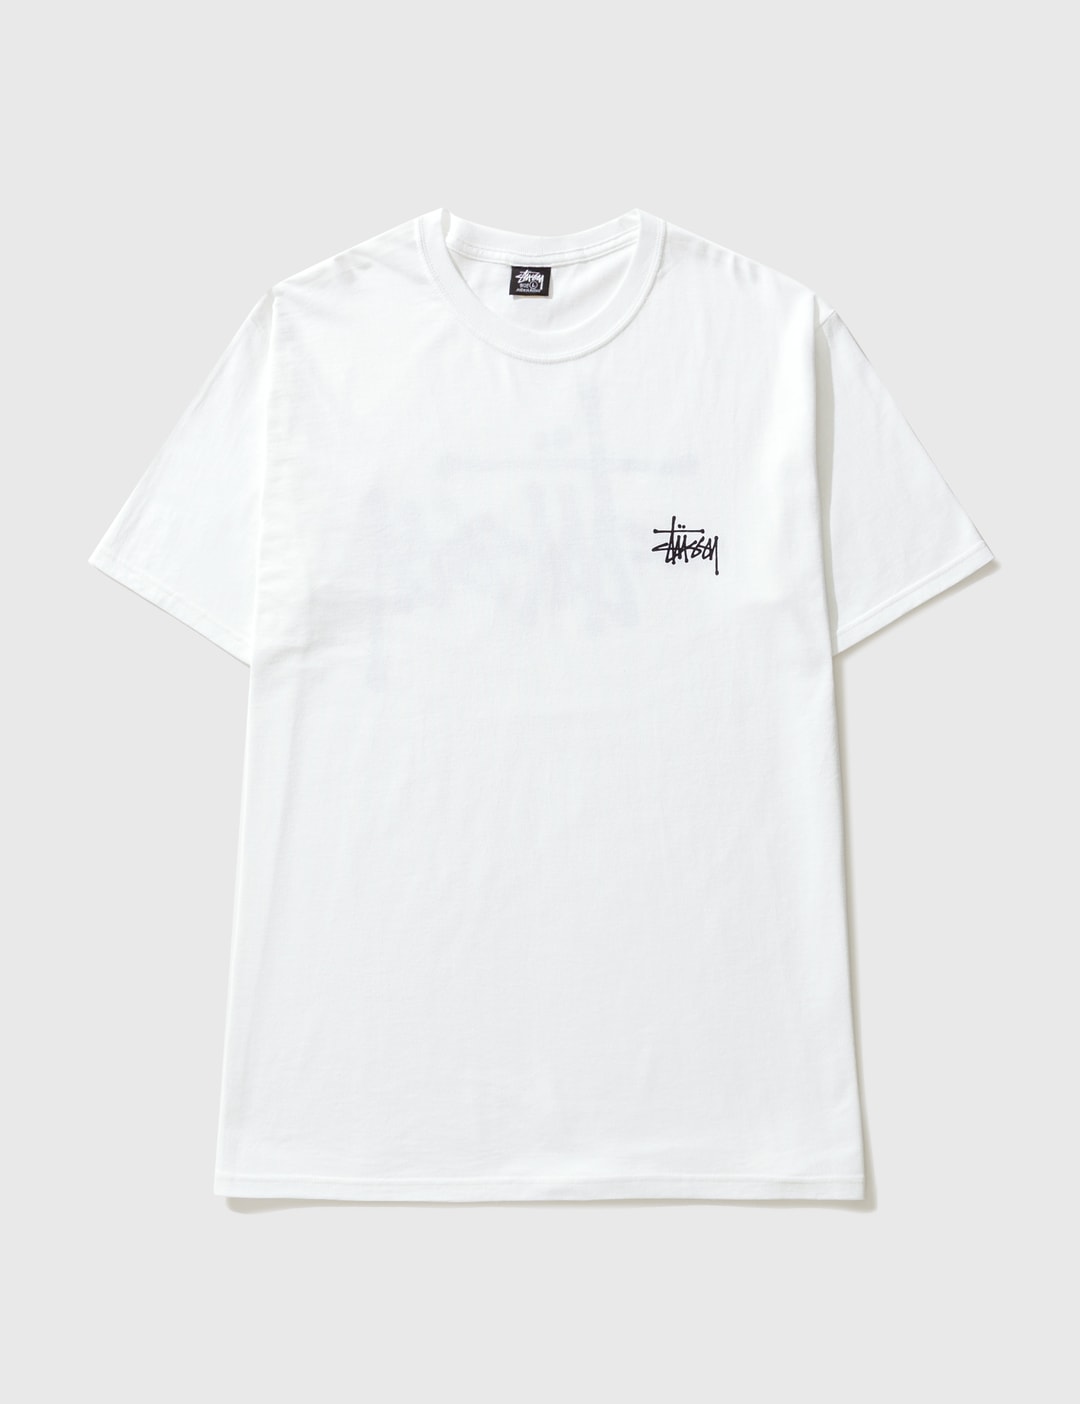 Stüssy - Basic Stussy T-shirt | HBX - Globally Curated Fashion and ...